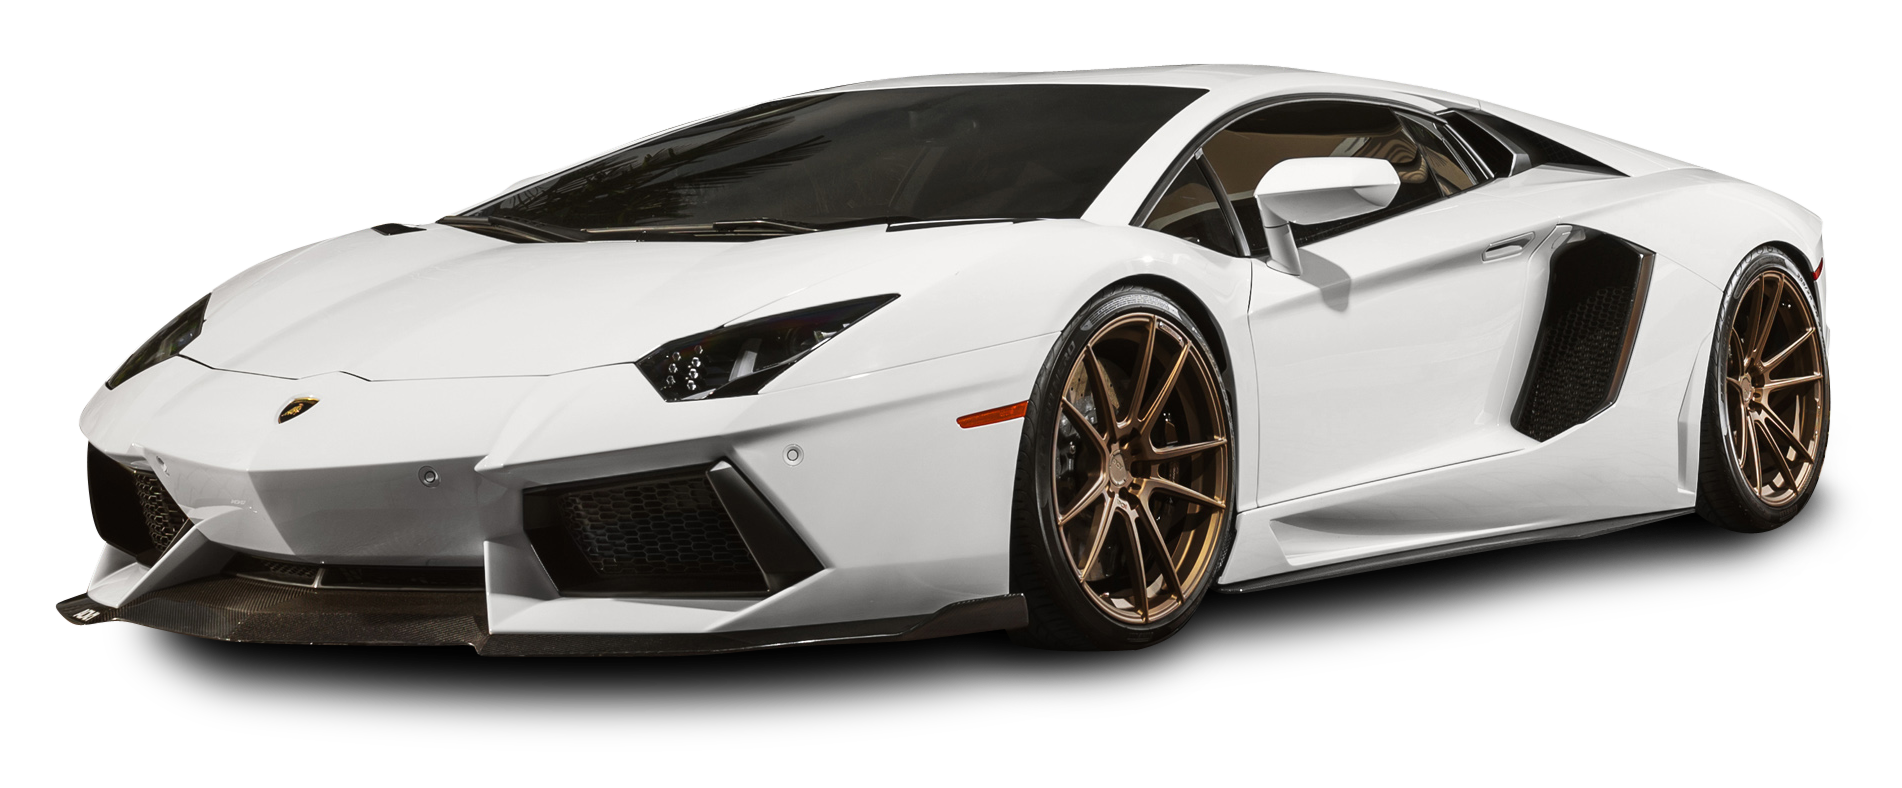 White Lamborghini Aventador Car PNG Image - PurePNG | Free ...